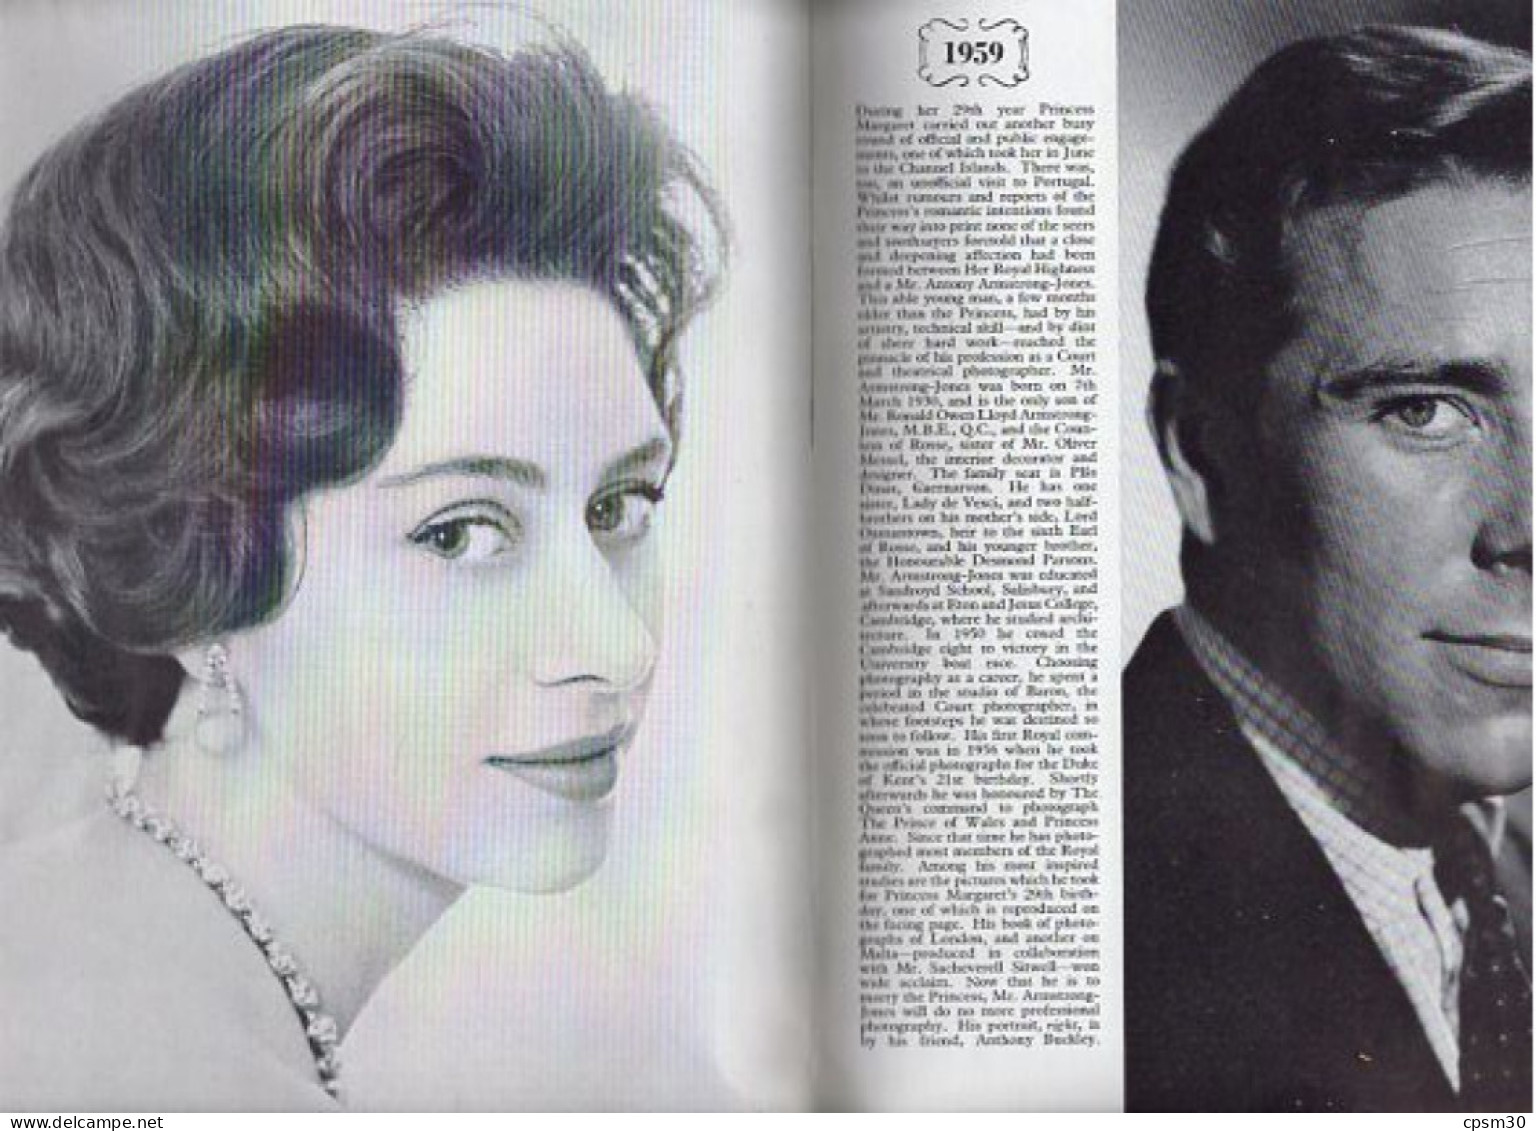 Princess MARGARET'S Betrothal Book, 1960